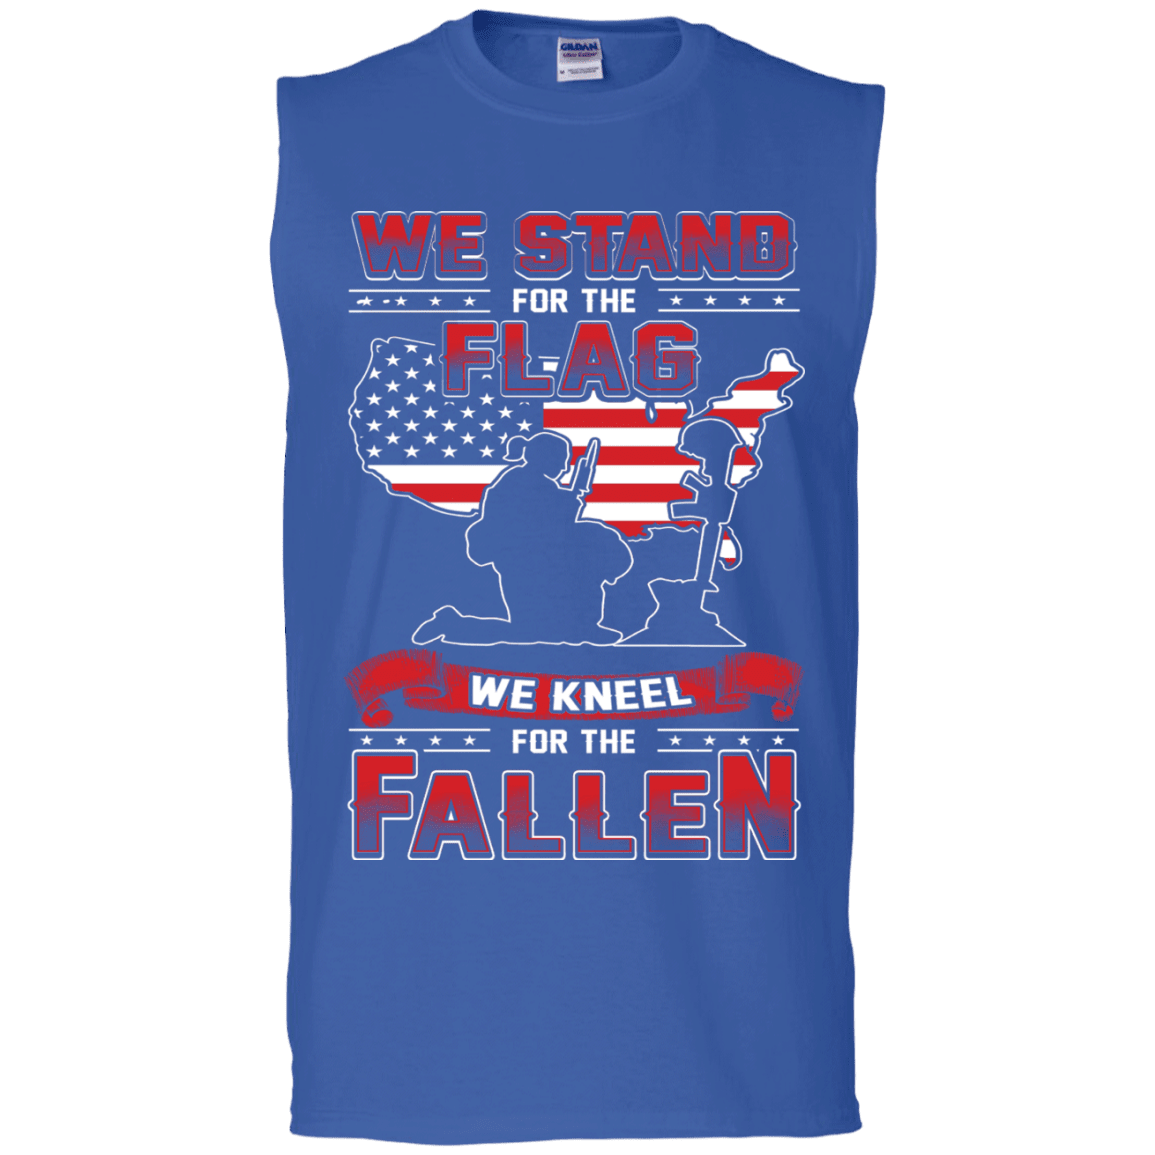 Military T-Shirt "Stand For The Flag, Kneel For The Fallen Female Veterans" Front-TShirt-General-Veterans Nation